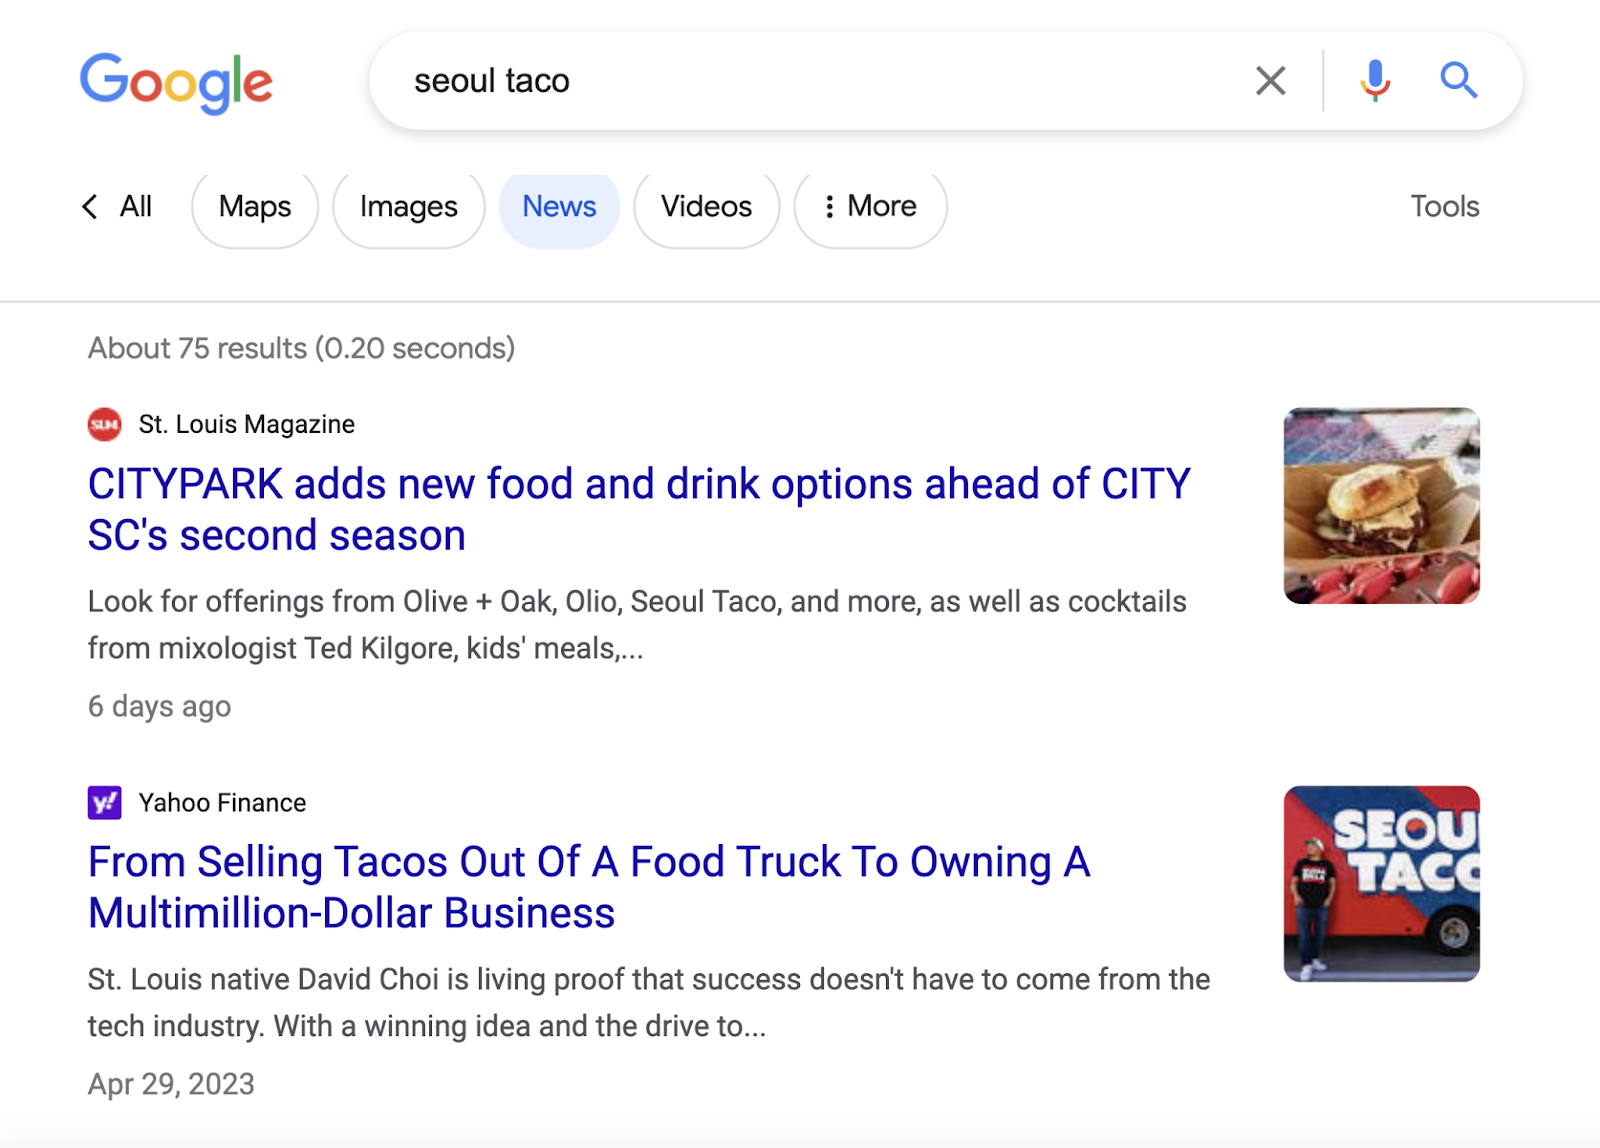 Google's “News” conception  for "seoul taco" query